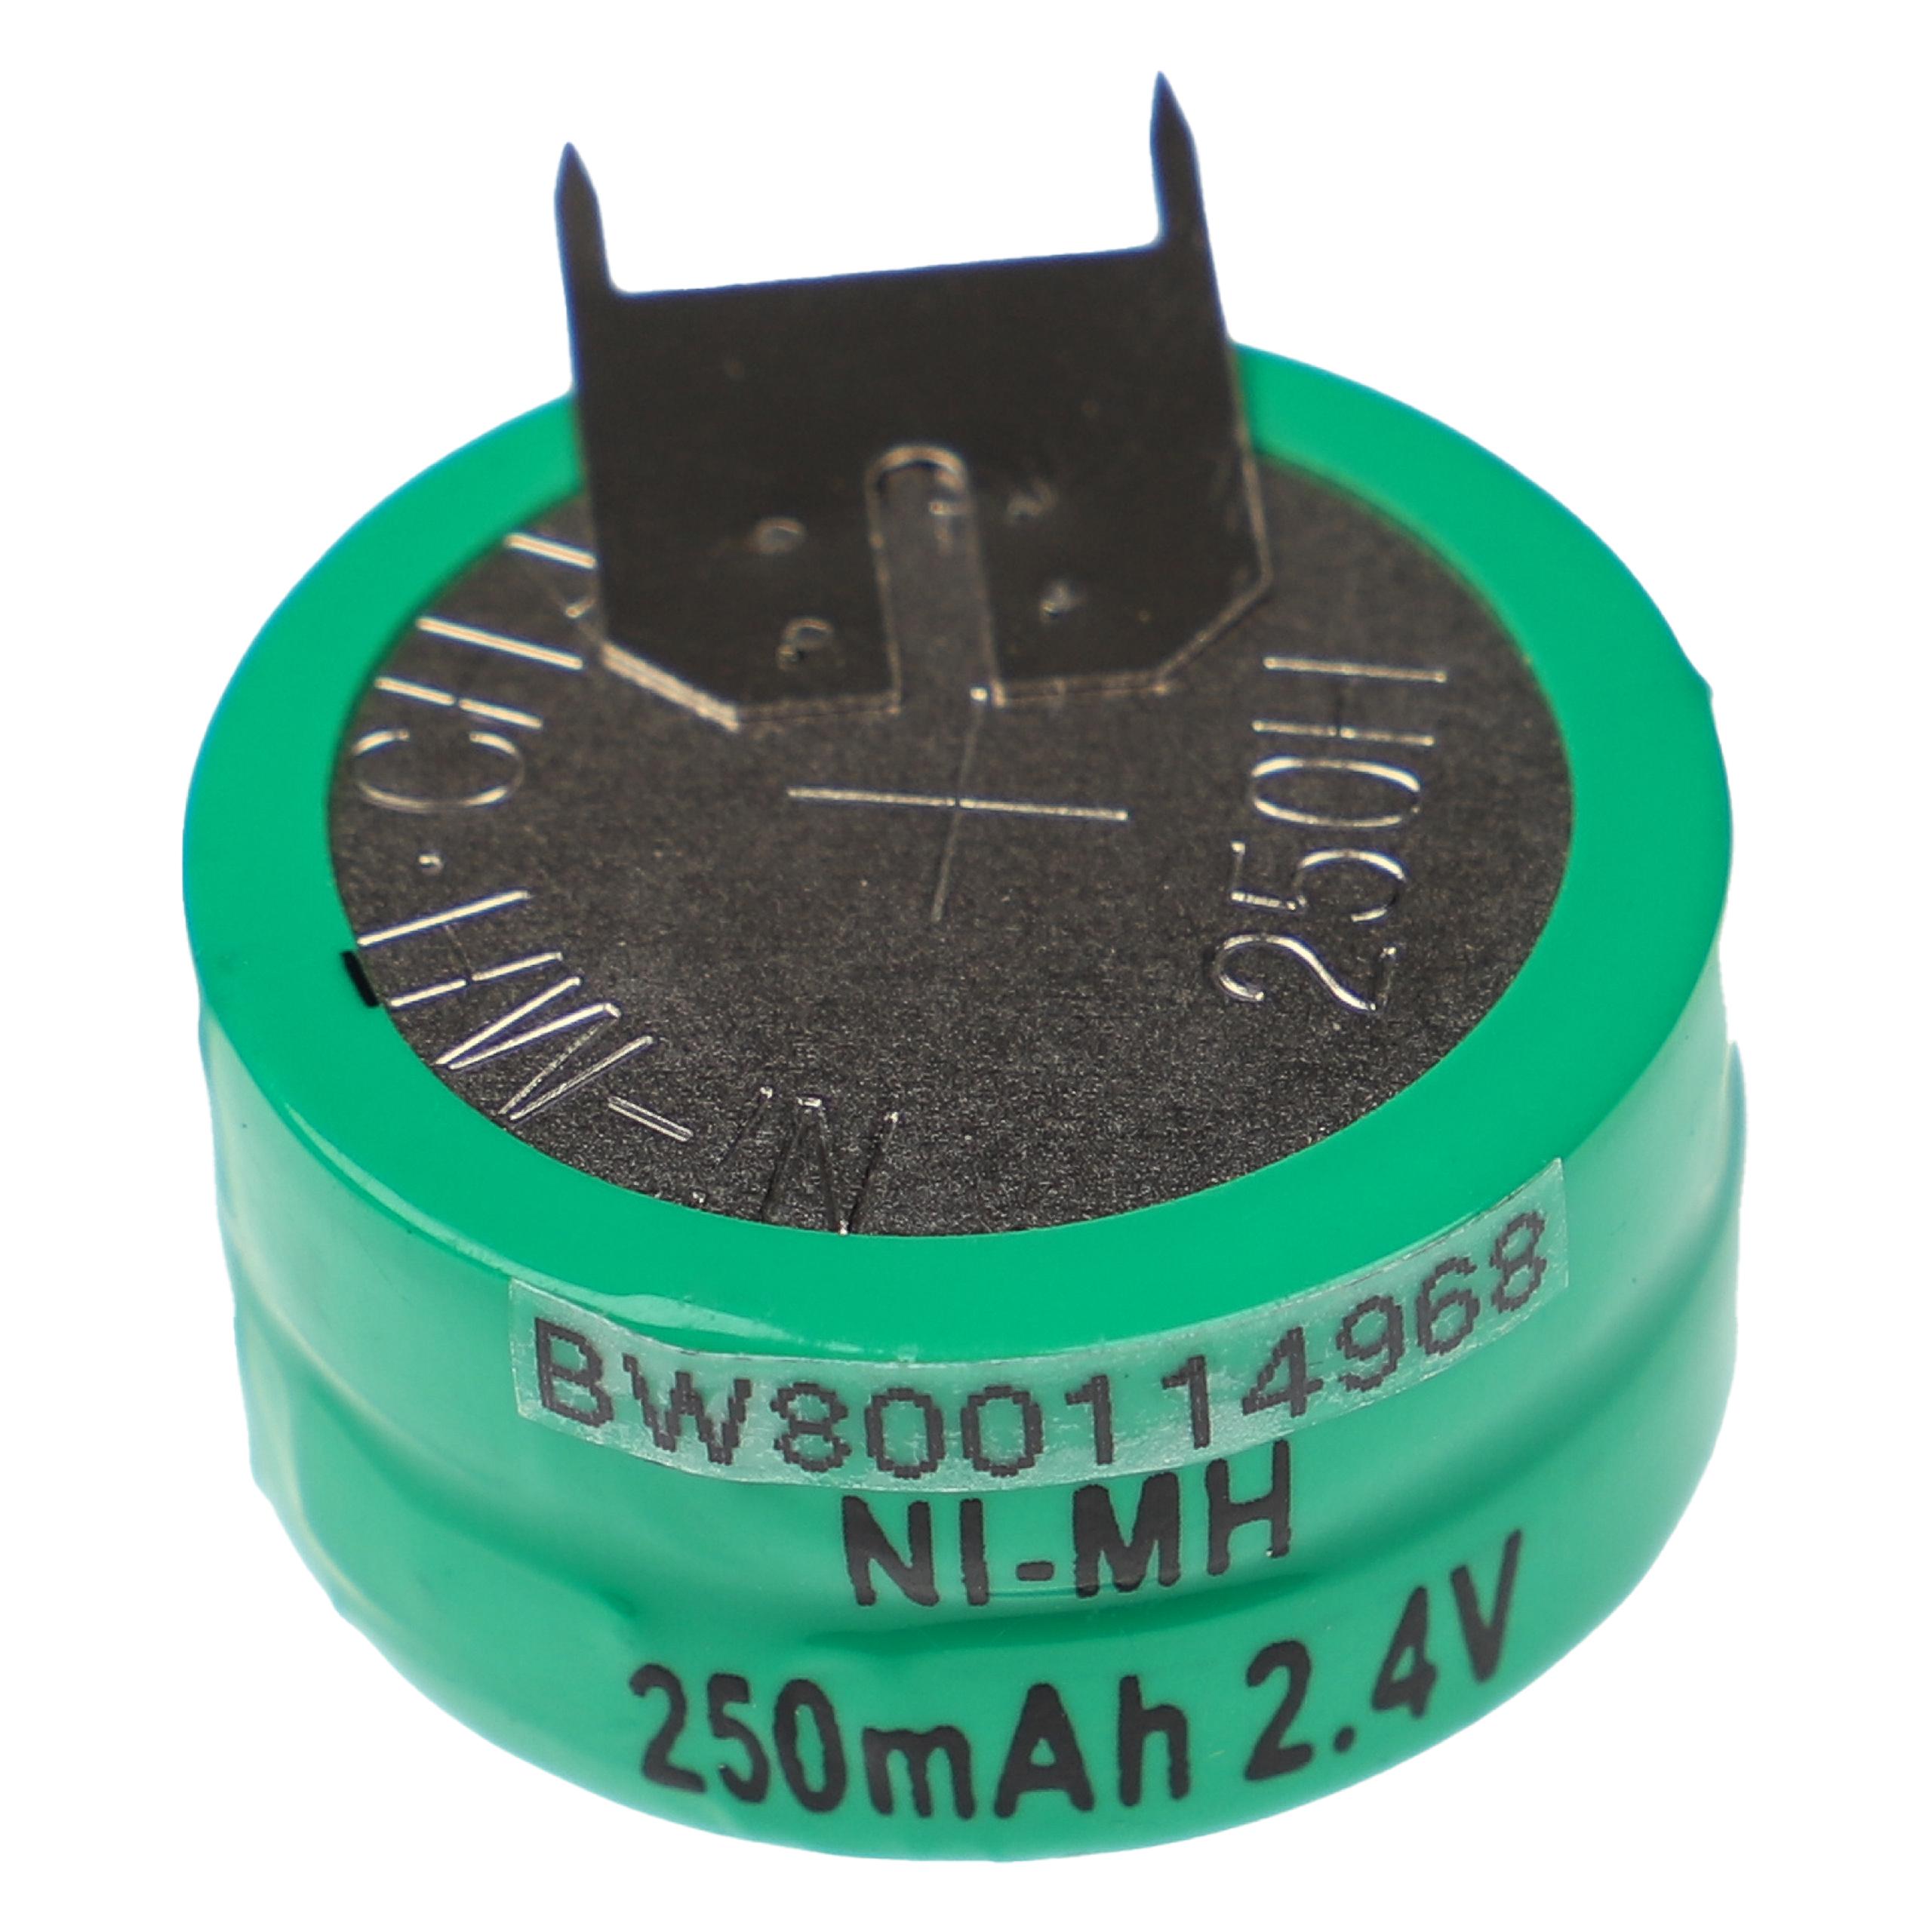 Akumulator guzikowy (2x ogniwo) typ 2/V250H 3 pin do modeli, lamp solarnych itp. - 250 mAh, 2,4 V, NiMH